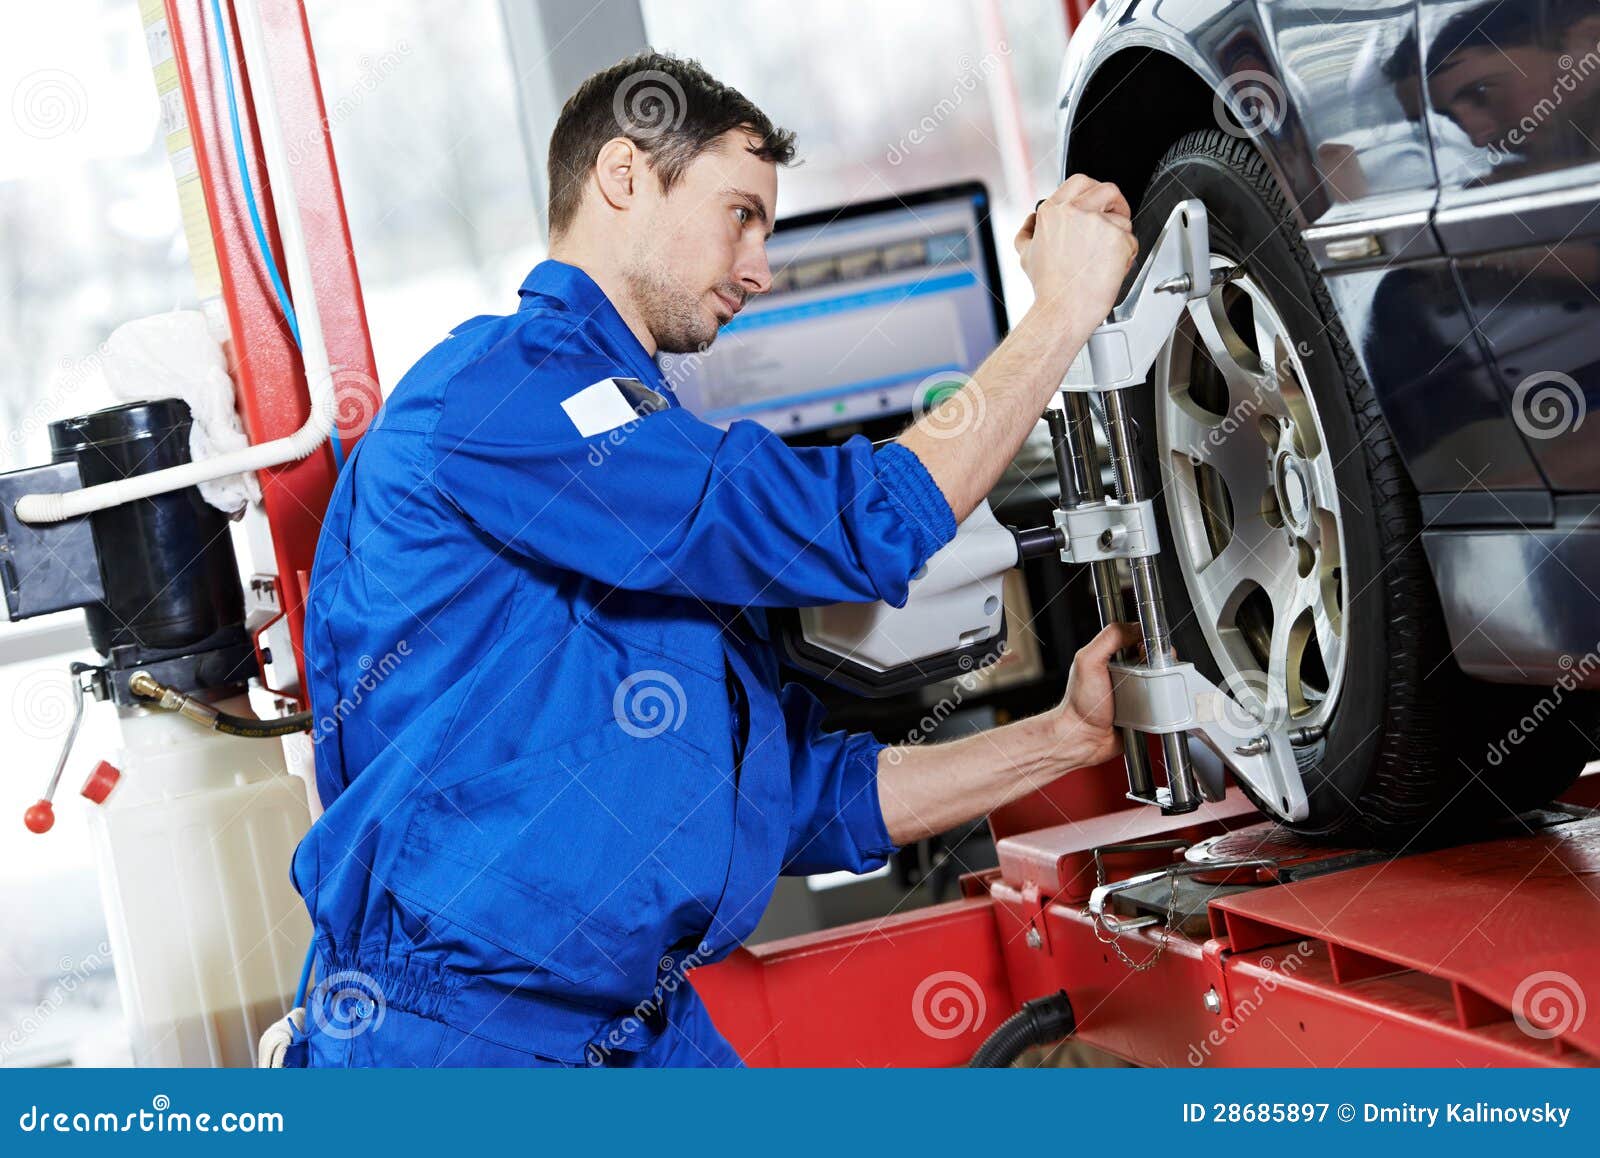 auto-mechanic-wheel-alignment-work-spanner-28685897.jpg